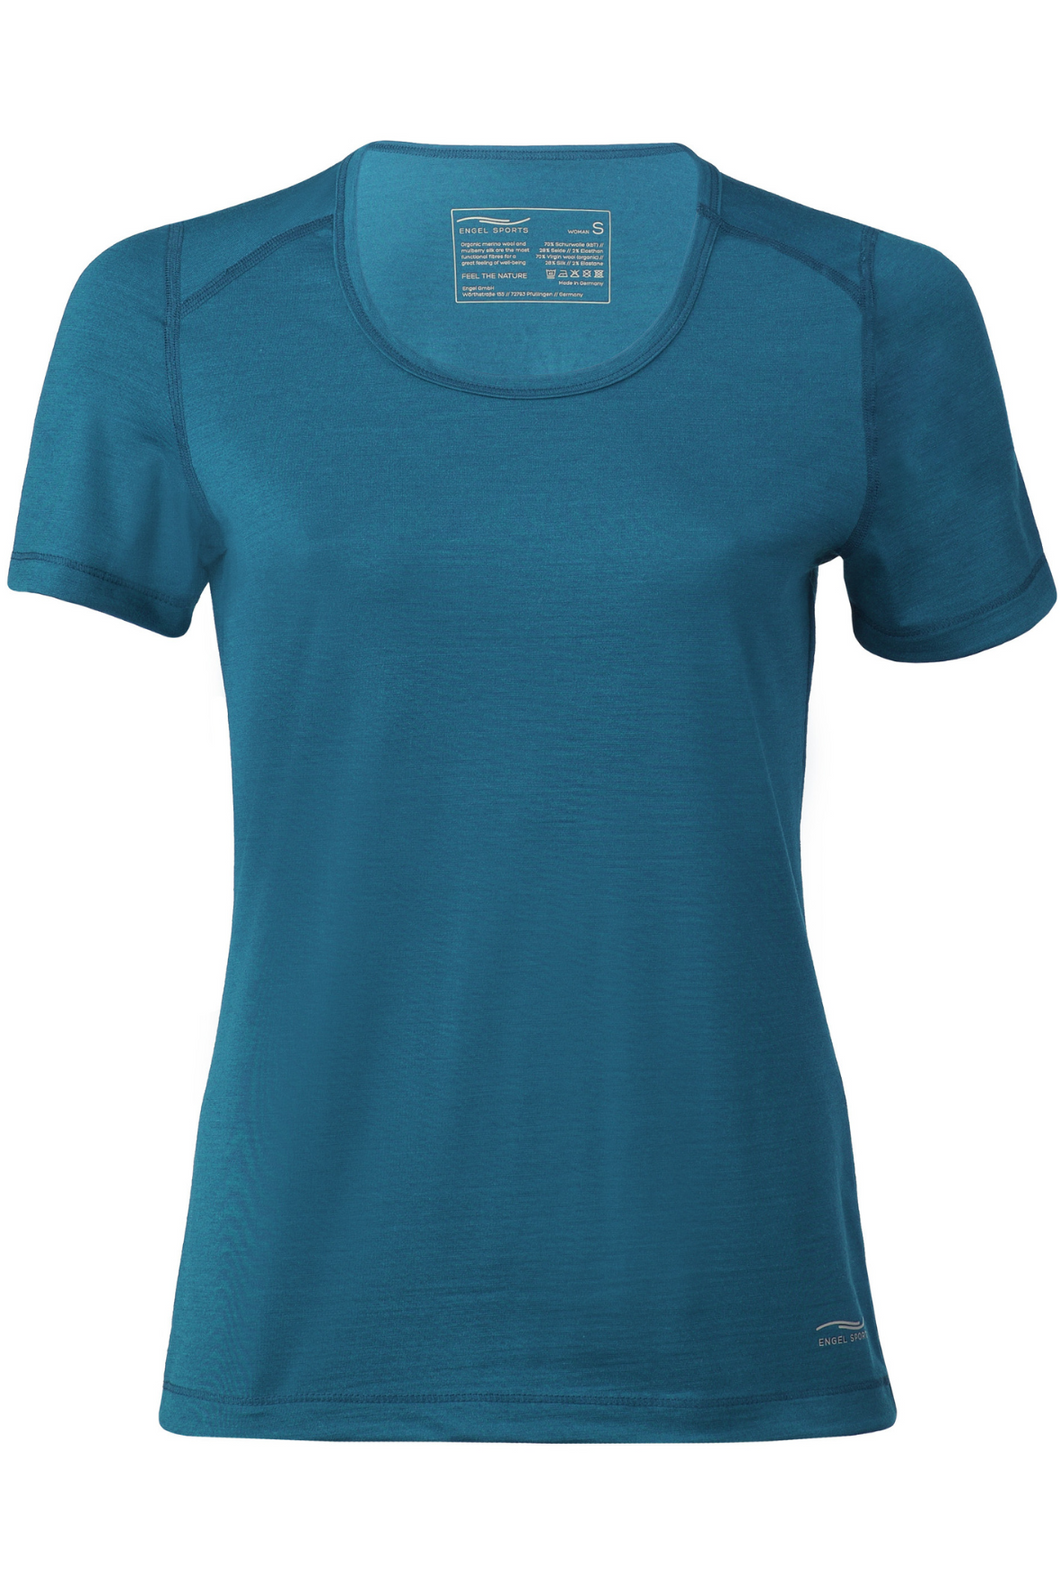 Engel Women Eco Sport Short-Sleeve Shirt, Merino Wool/Silk